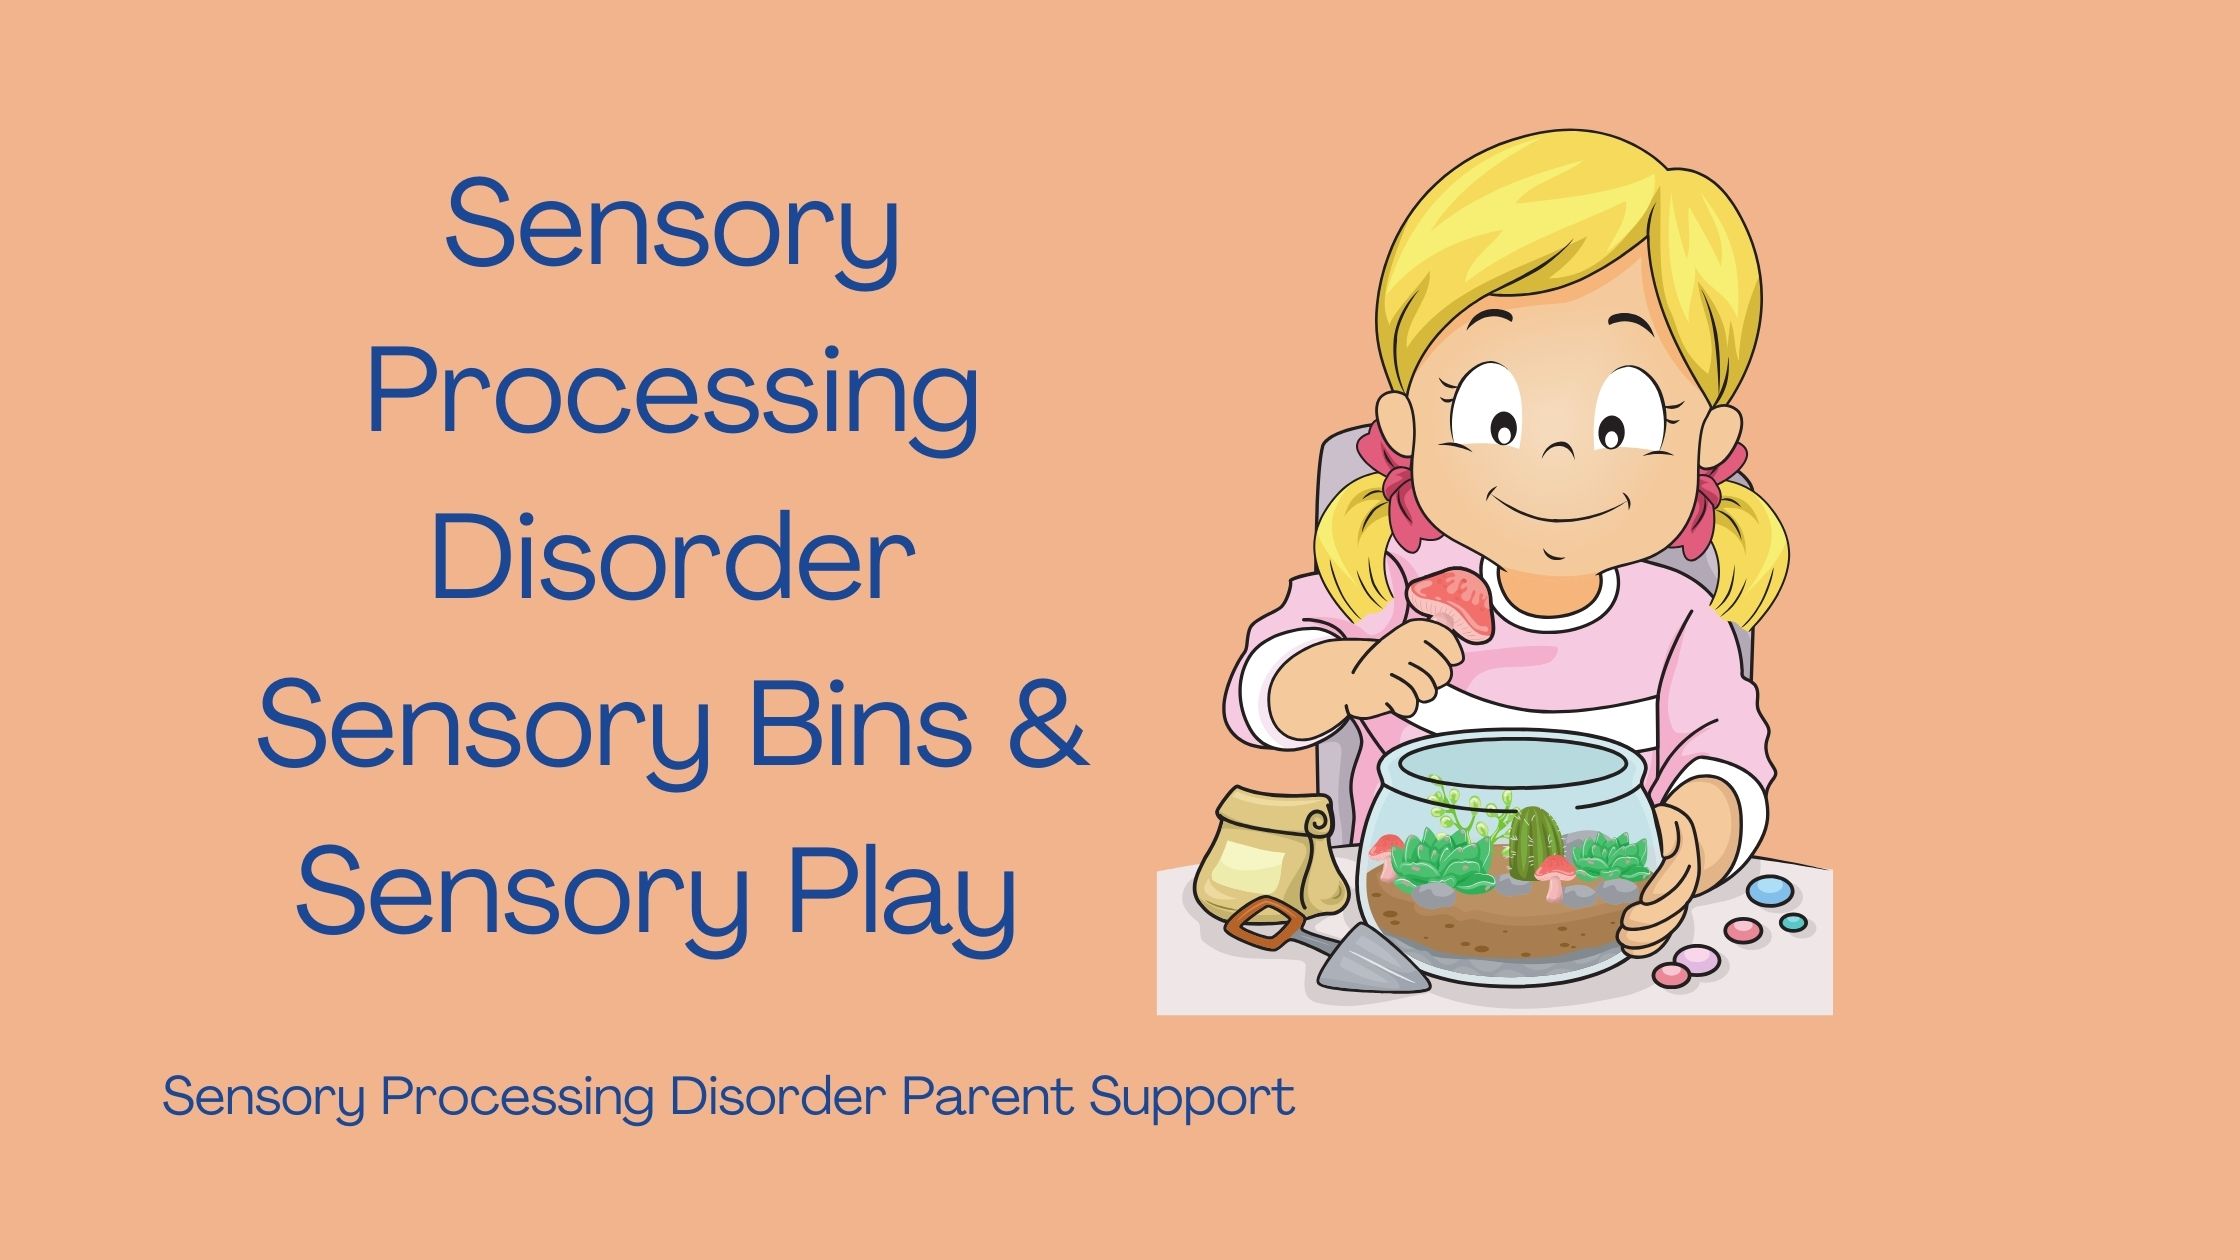 child with sensory processing disorder playing with sensory bin Sensory Processing Disorder Sensory Bins & Sensory Play